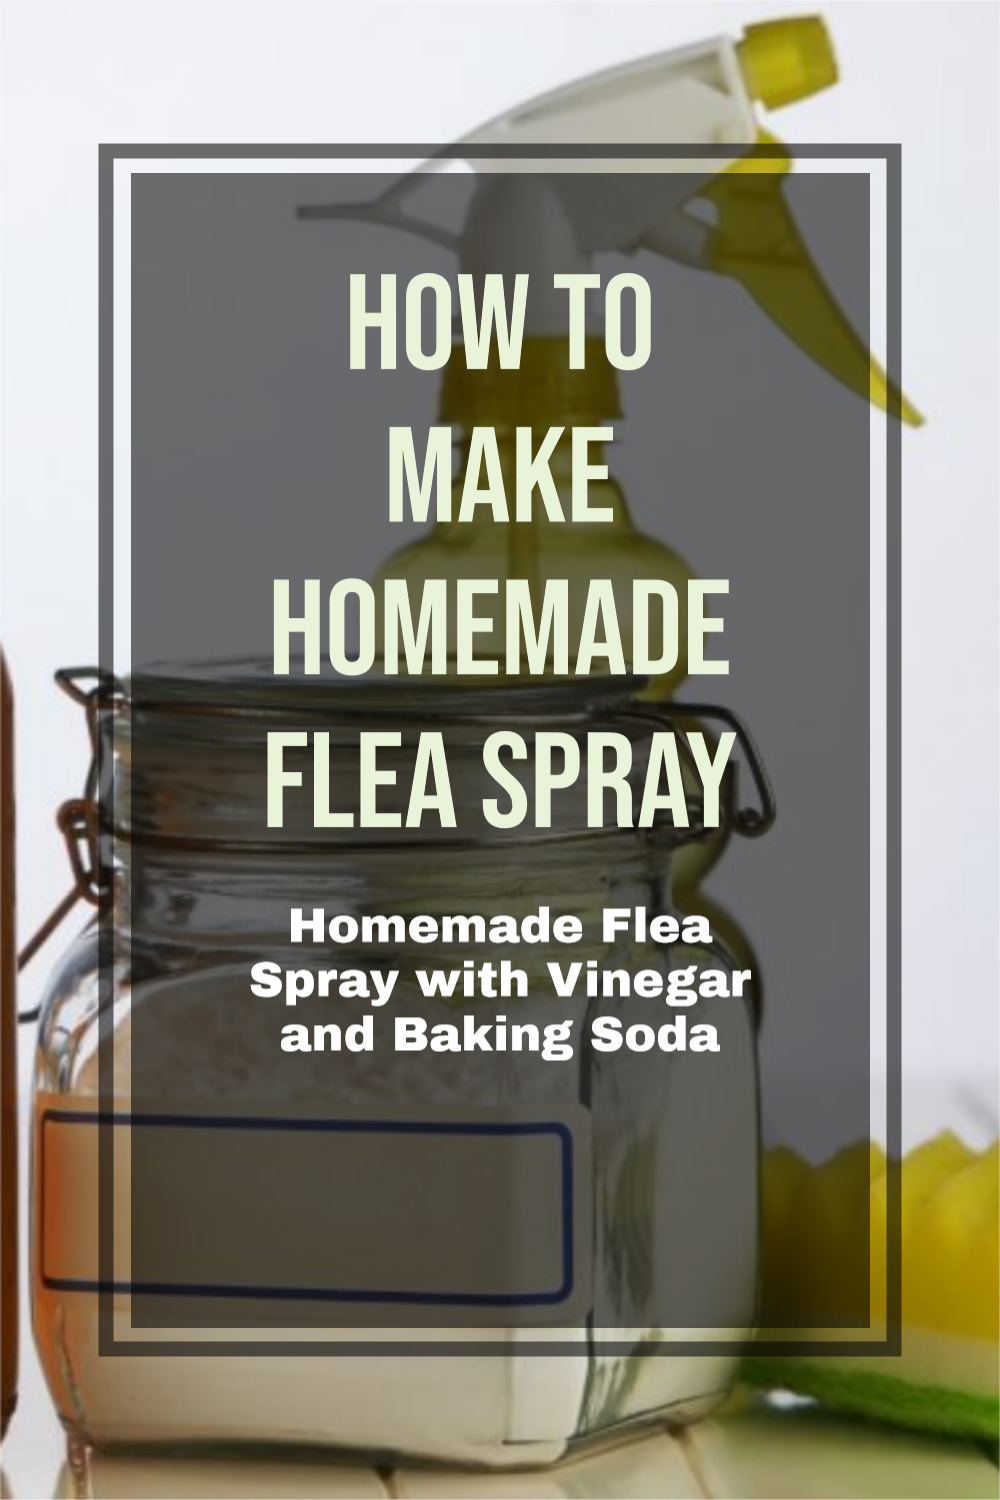 How to prepare Homemade Flea Spray with Vinegar and Baking Soda